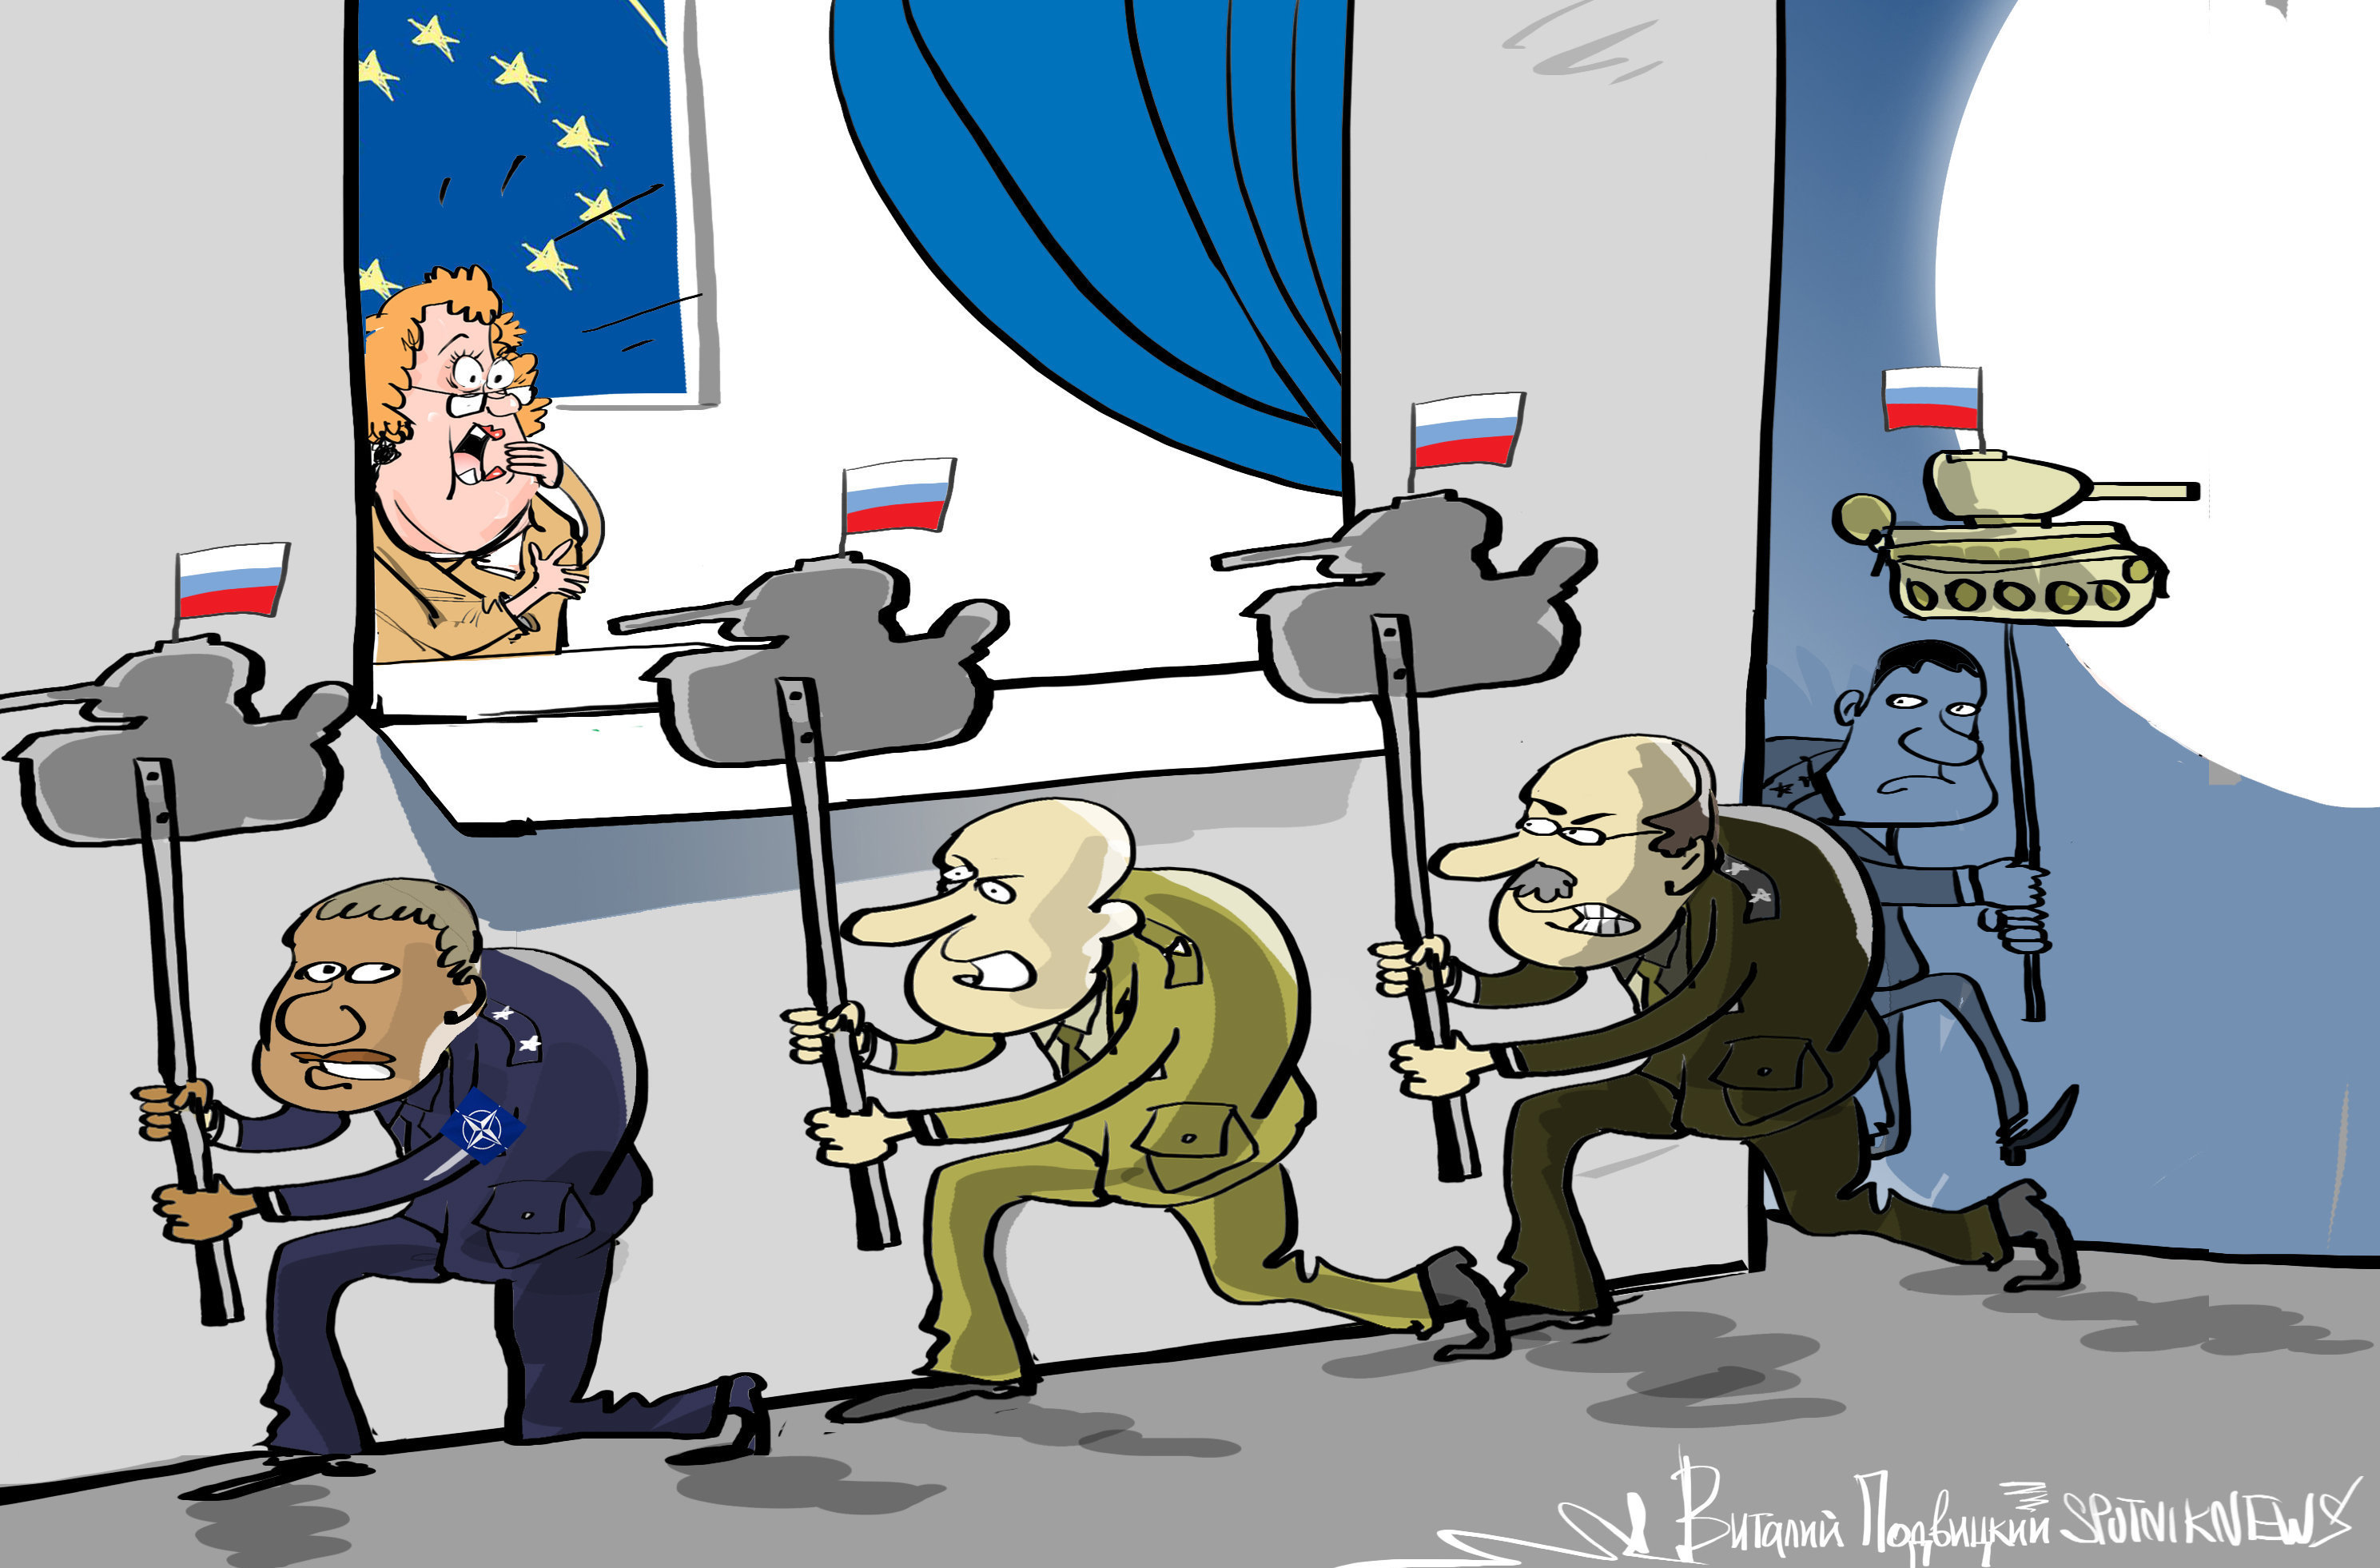 Сми про россию. Политические карикатуры. Карикатуры на Запад. Карикатура на США И Украину. Западные карикатуры.